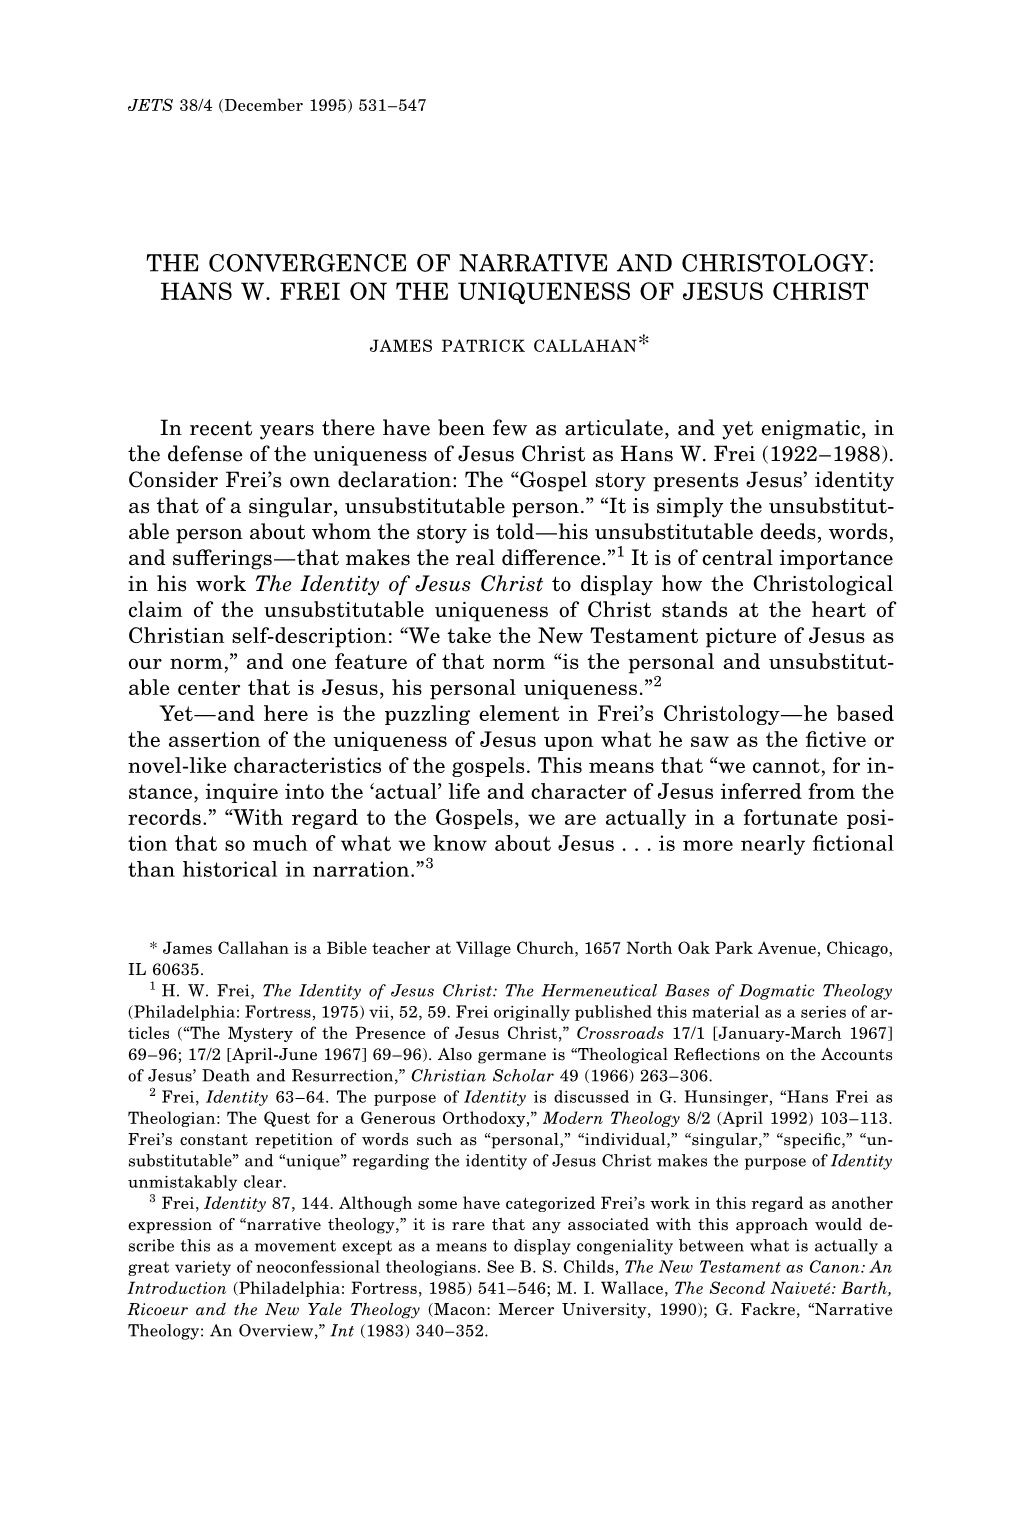 Hans W. Frei on the Uniqueness of Jesus Christ James Patrick Callahan*